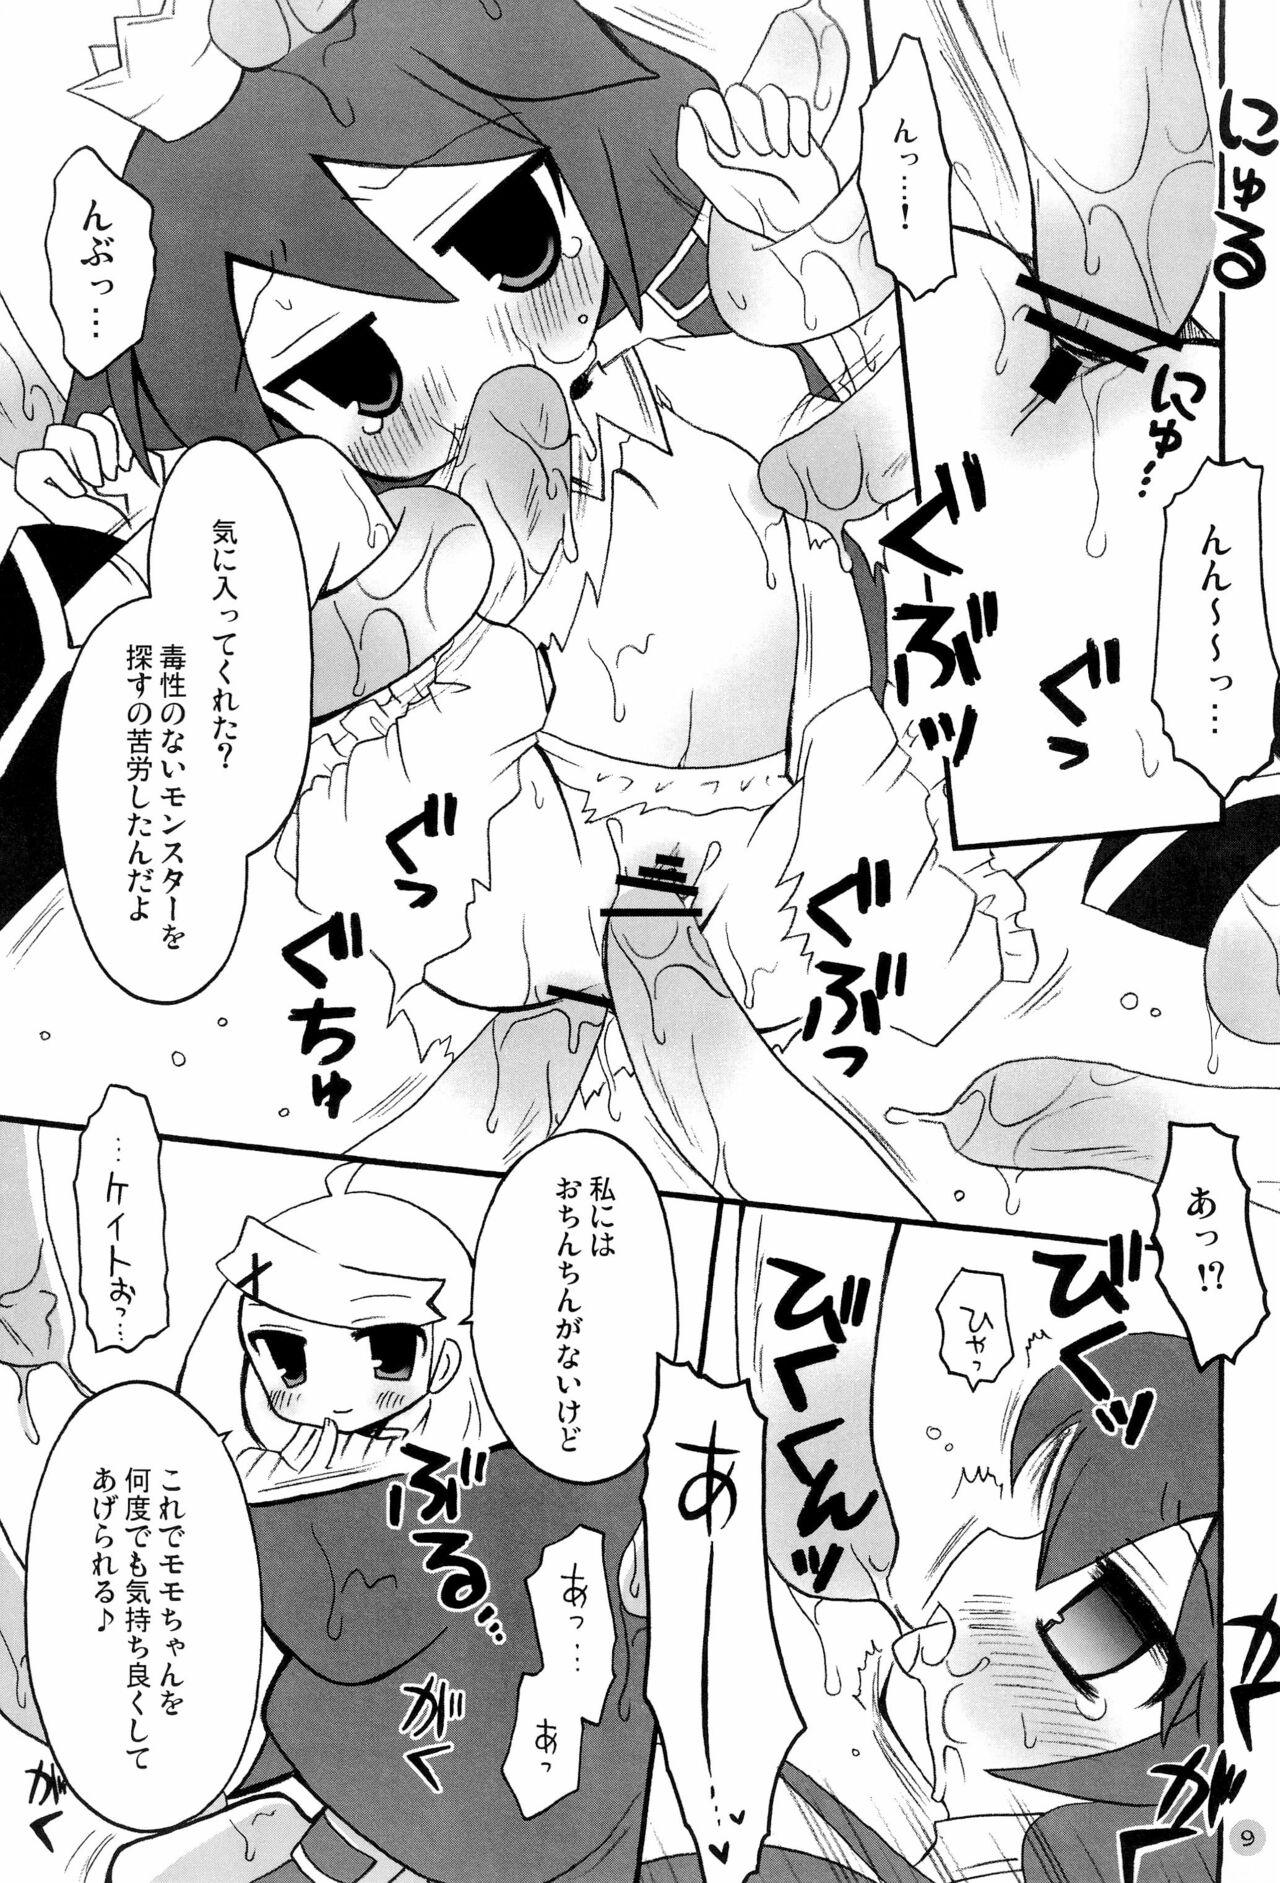 Little Harumomo no Tsubomi - 7th dragon Nylon - Page 9